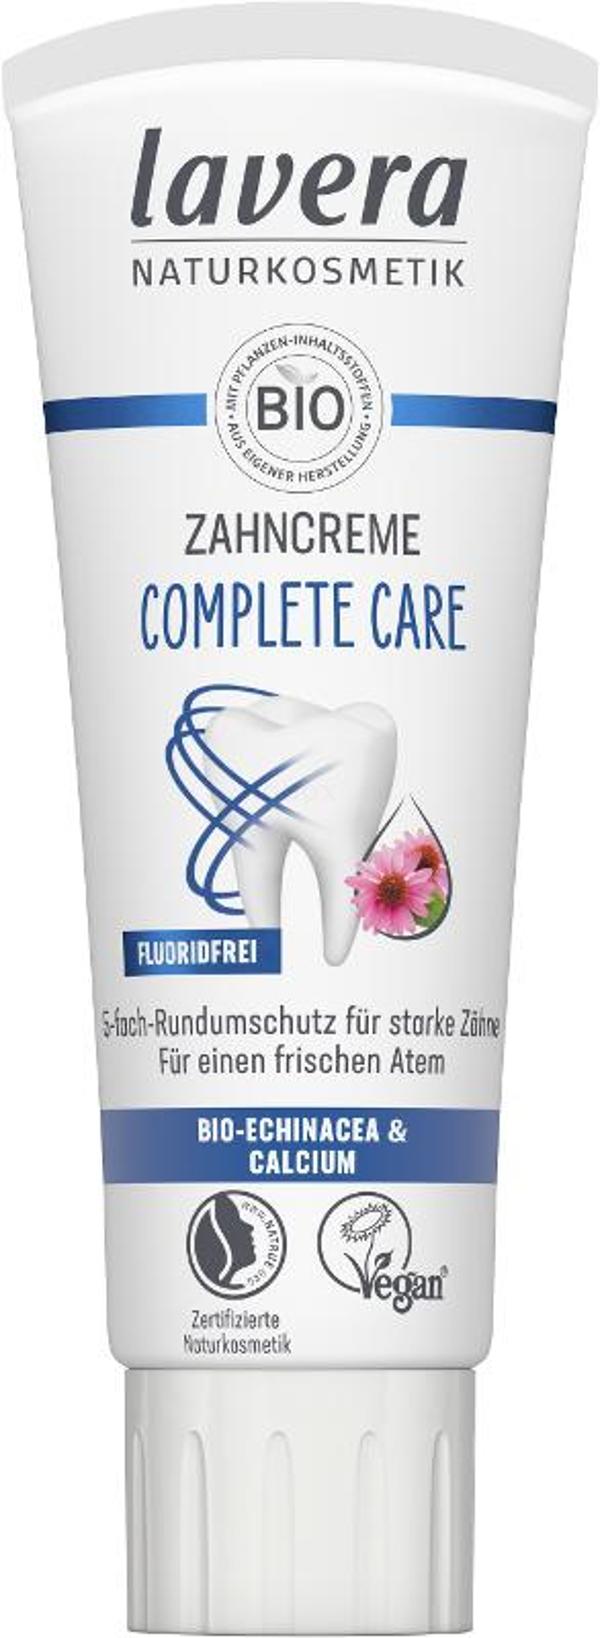 Produktfoto zu Basis sensitiv Zahncreme Complete Care Fluoridfrei, 75 ml